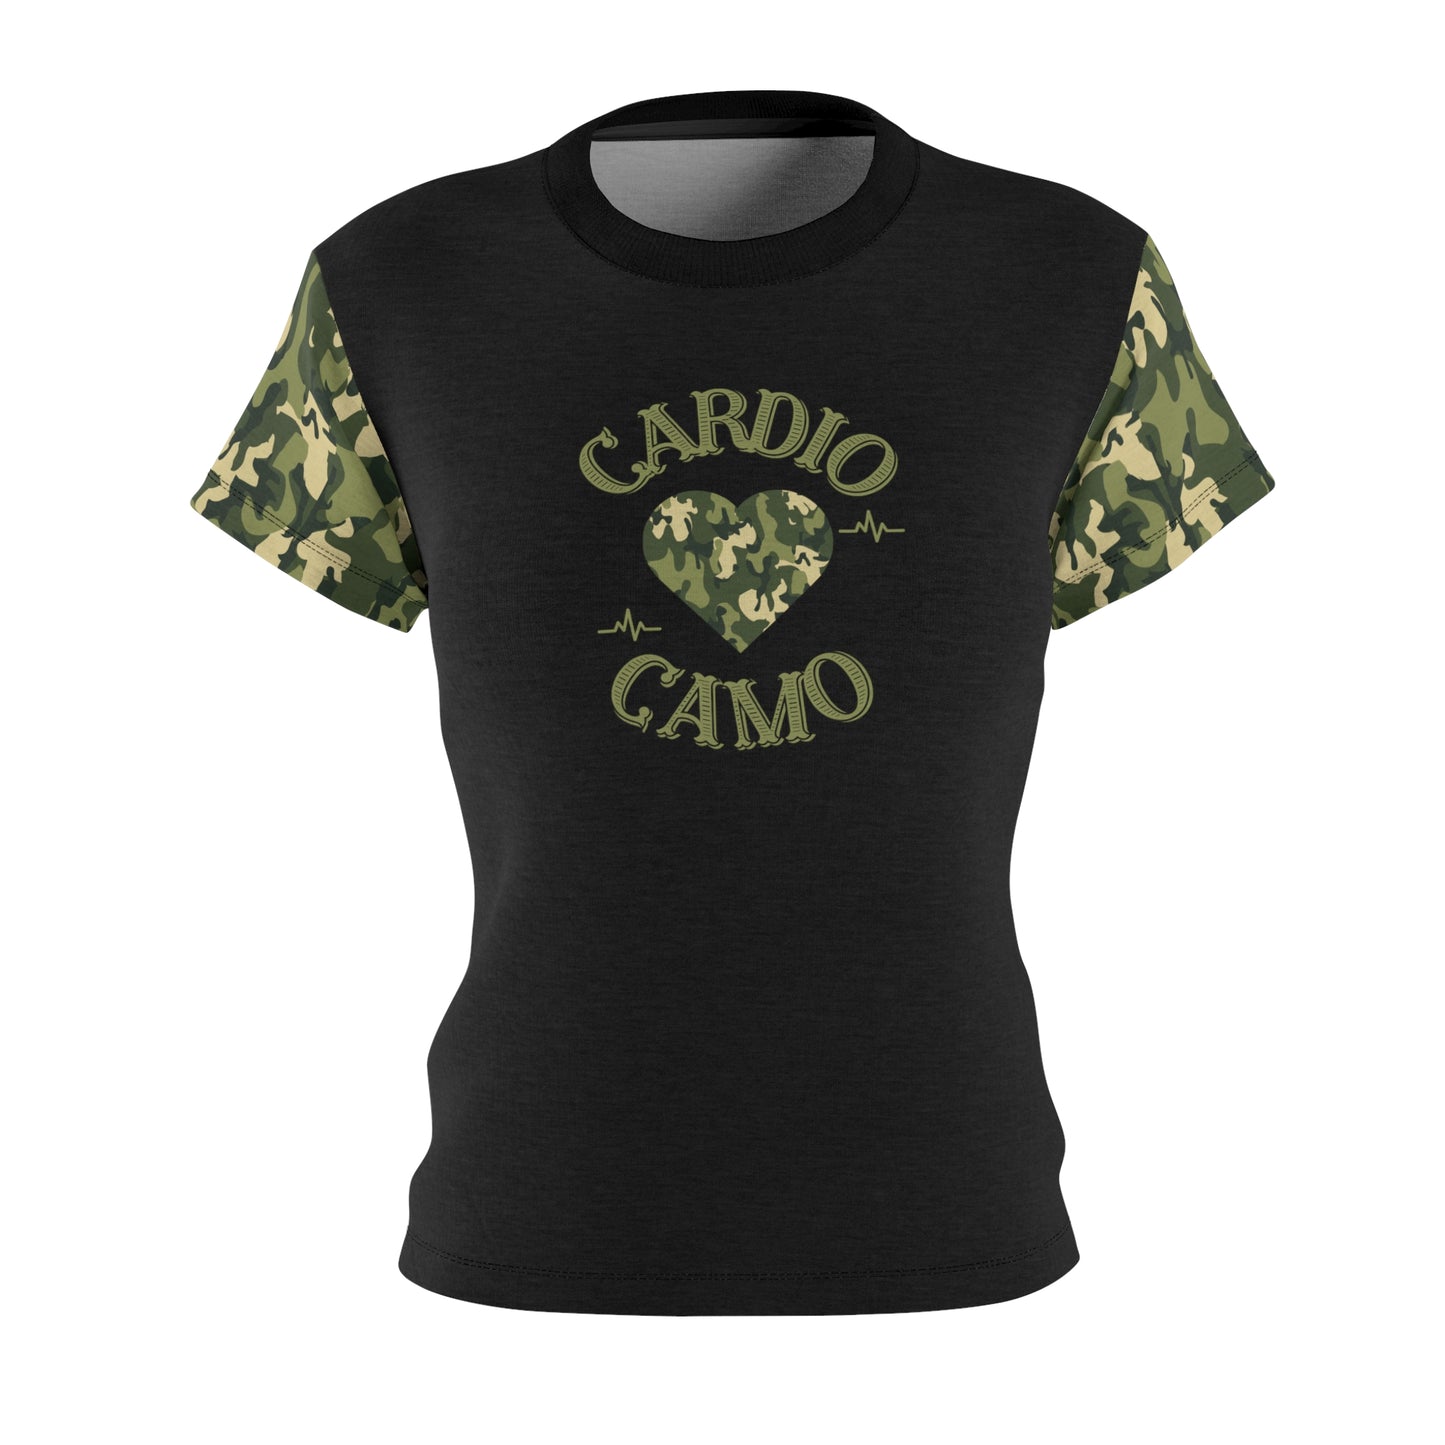 Cardio Camo - Women's Cut & Sew Tee